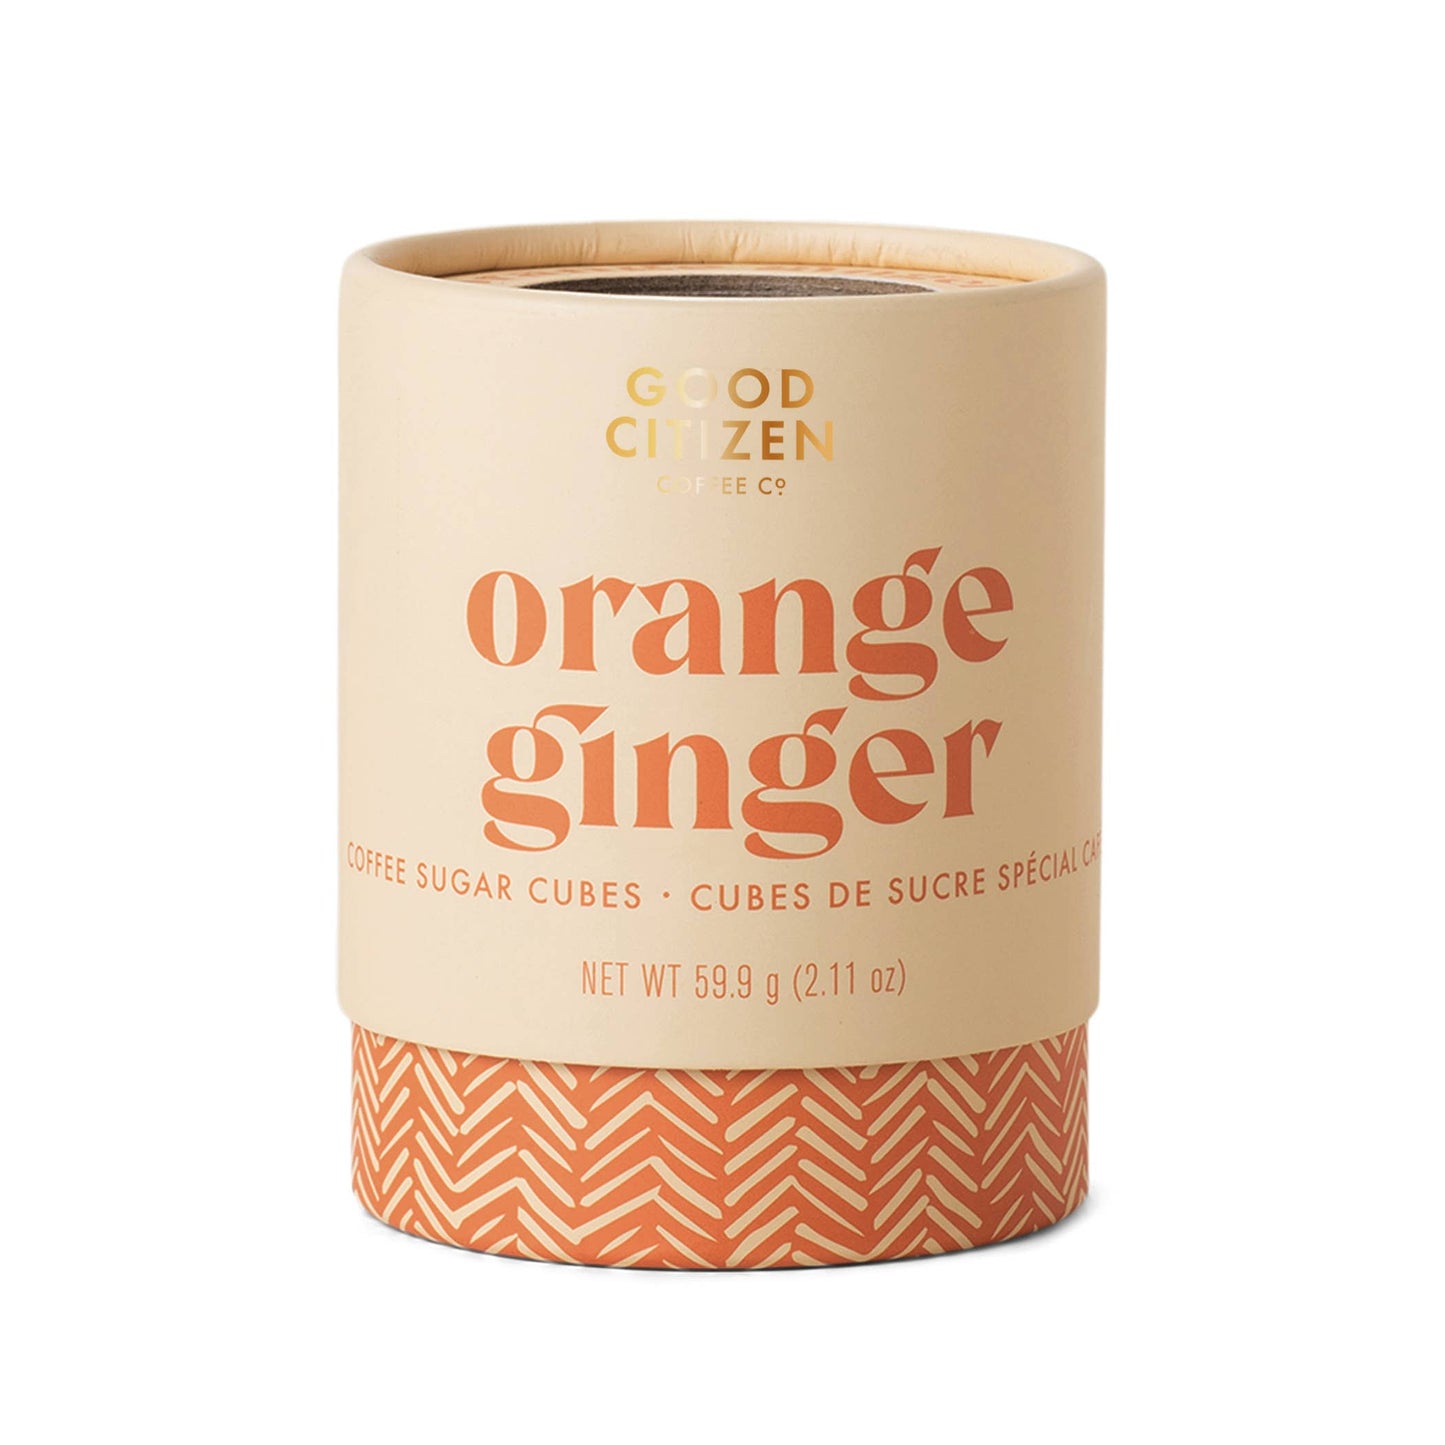 Sugar Cubes - Orange Ginger, 30 count